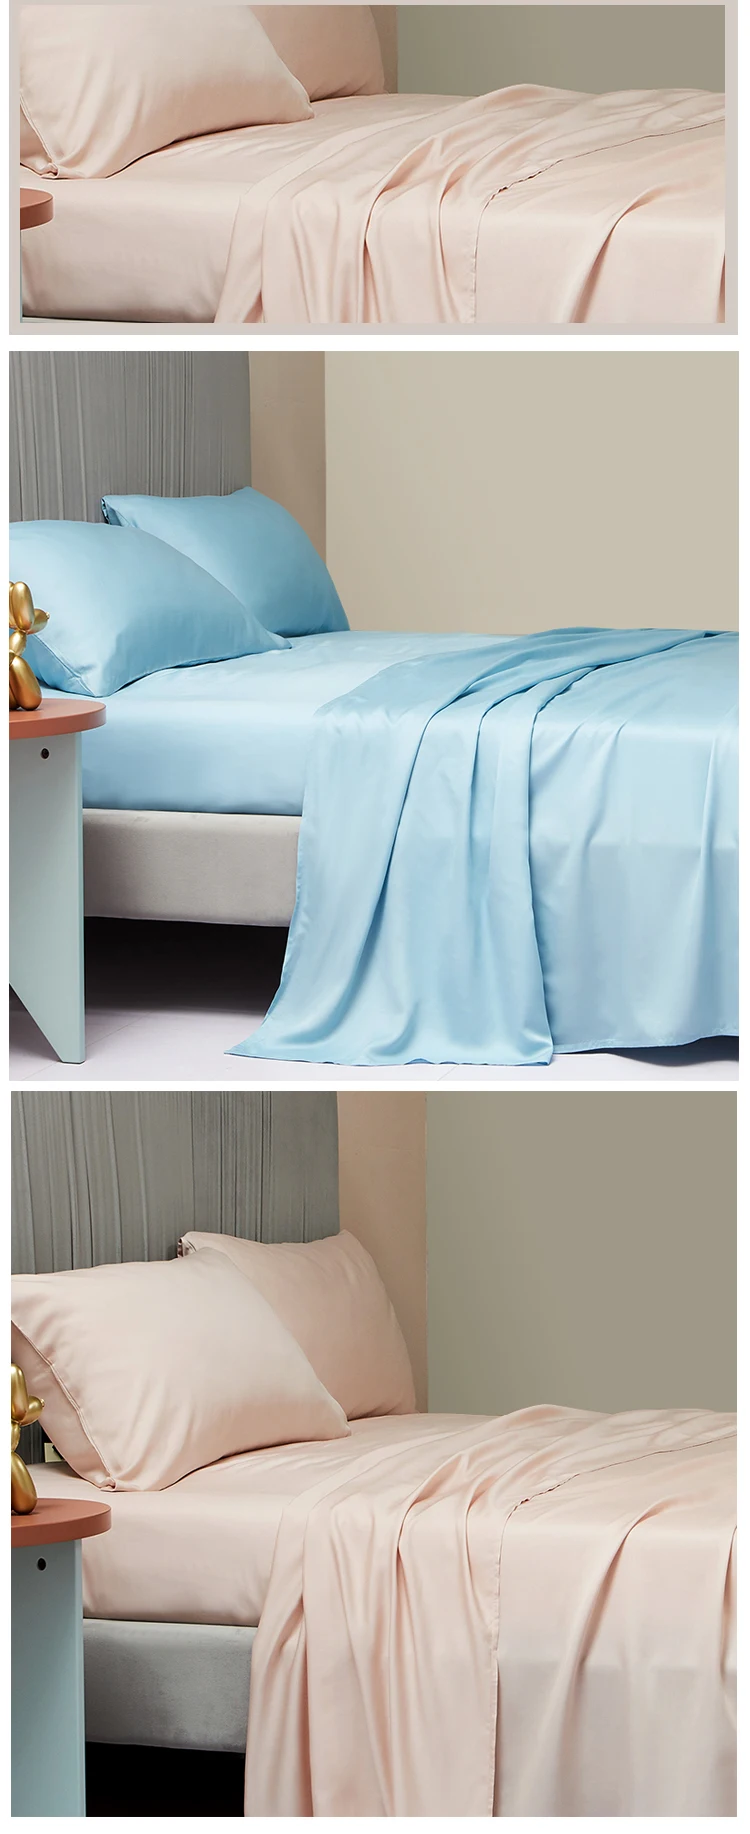 Enerup Custom Manufacturers Stock Home Textile Polyester Cotton Material Queen Size Fit BedSheet Set sabanas para cama